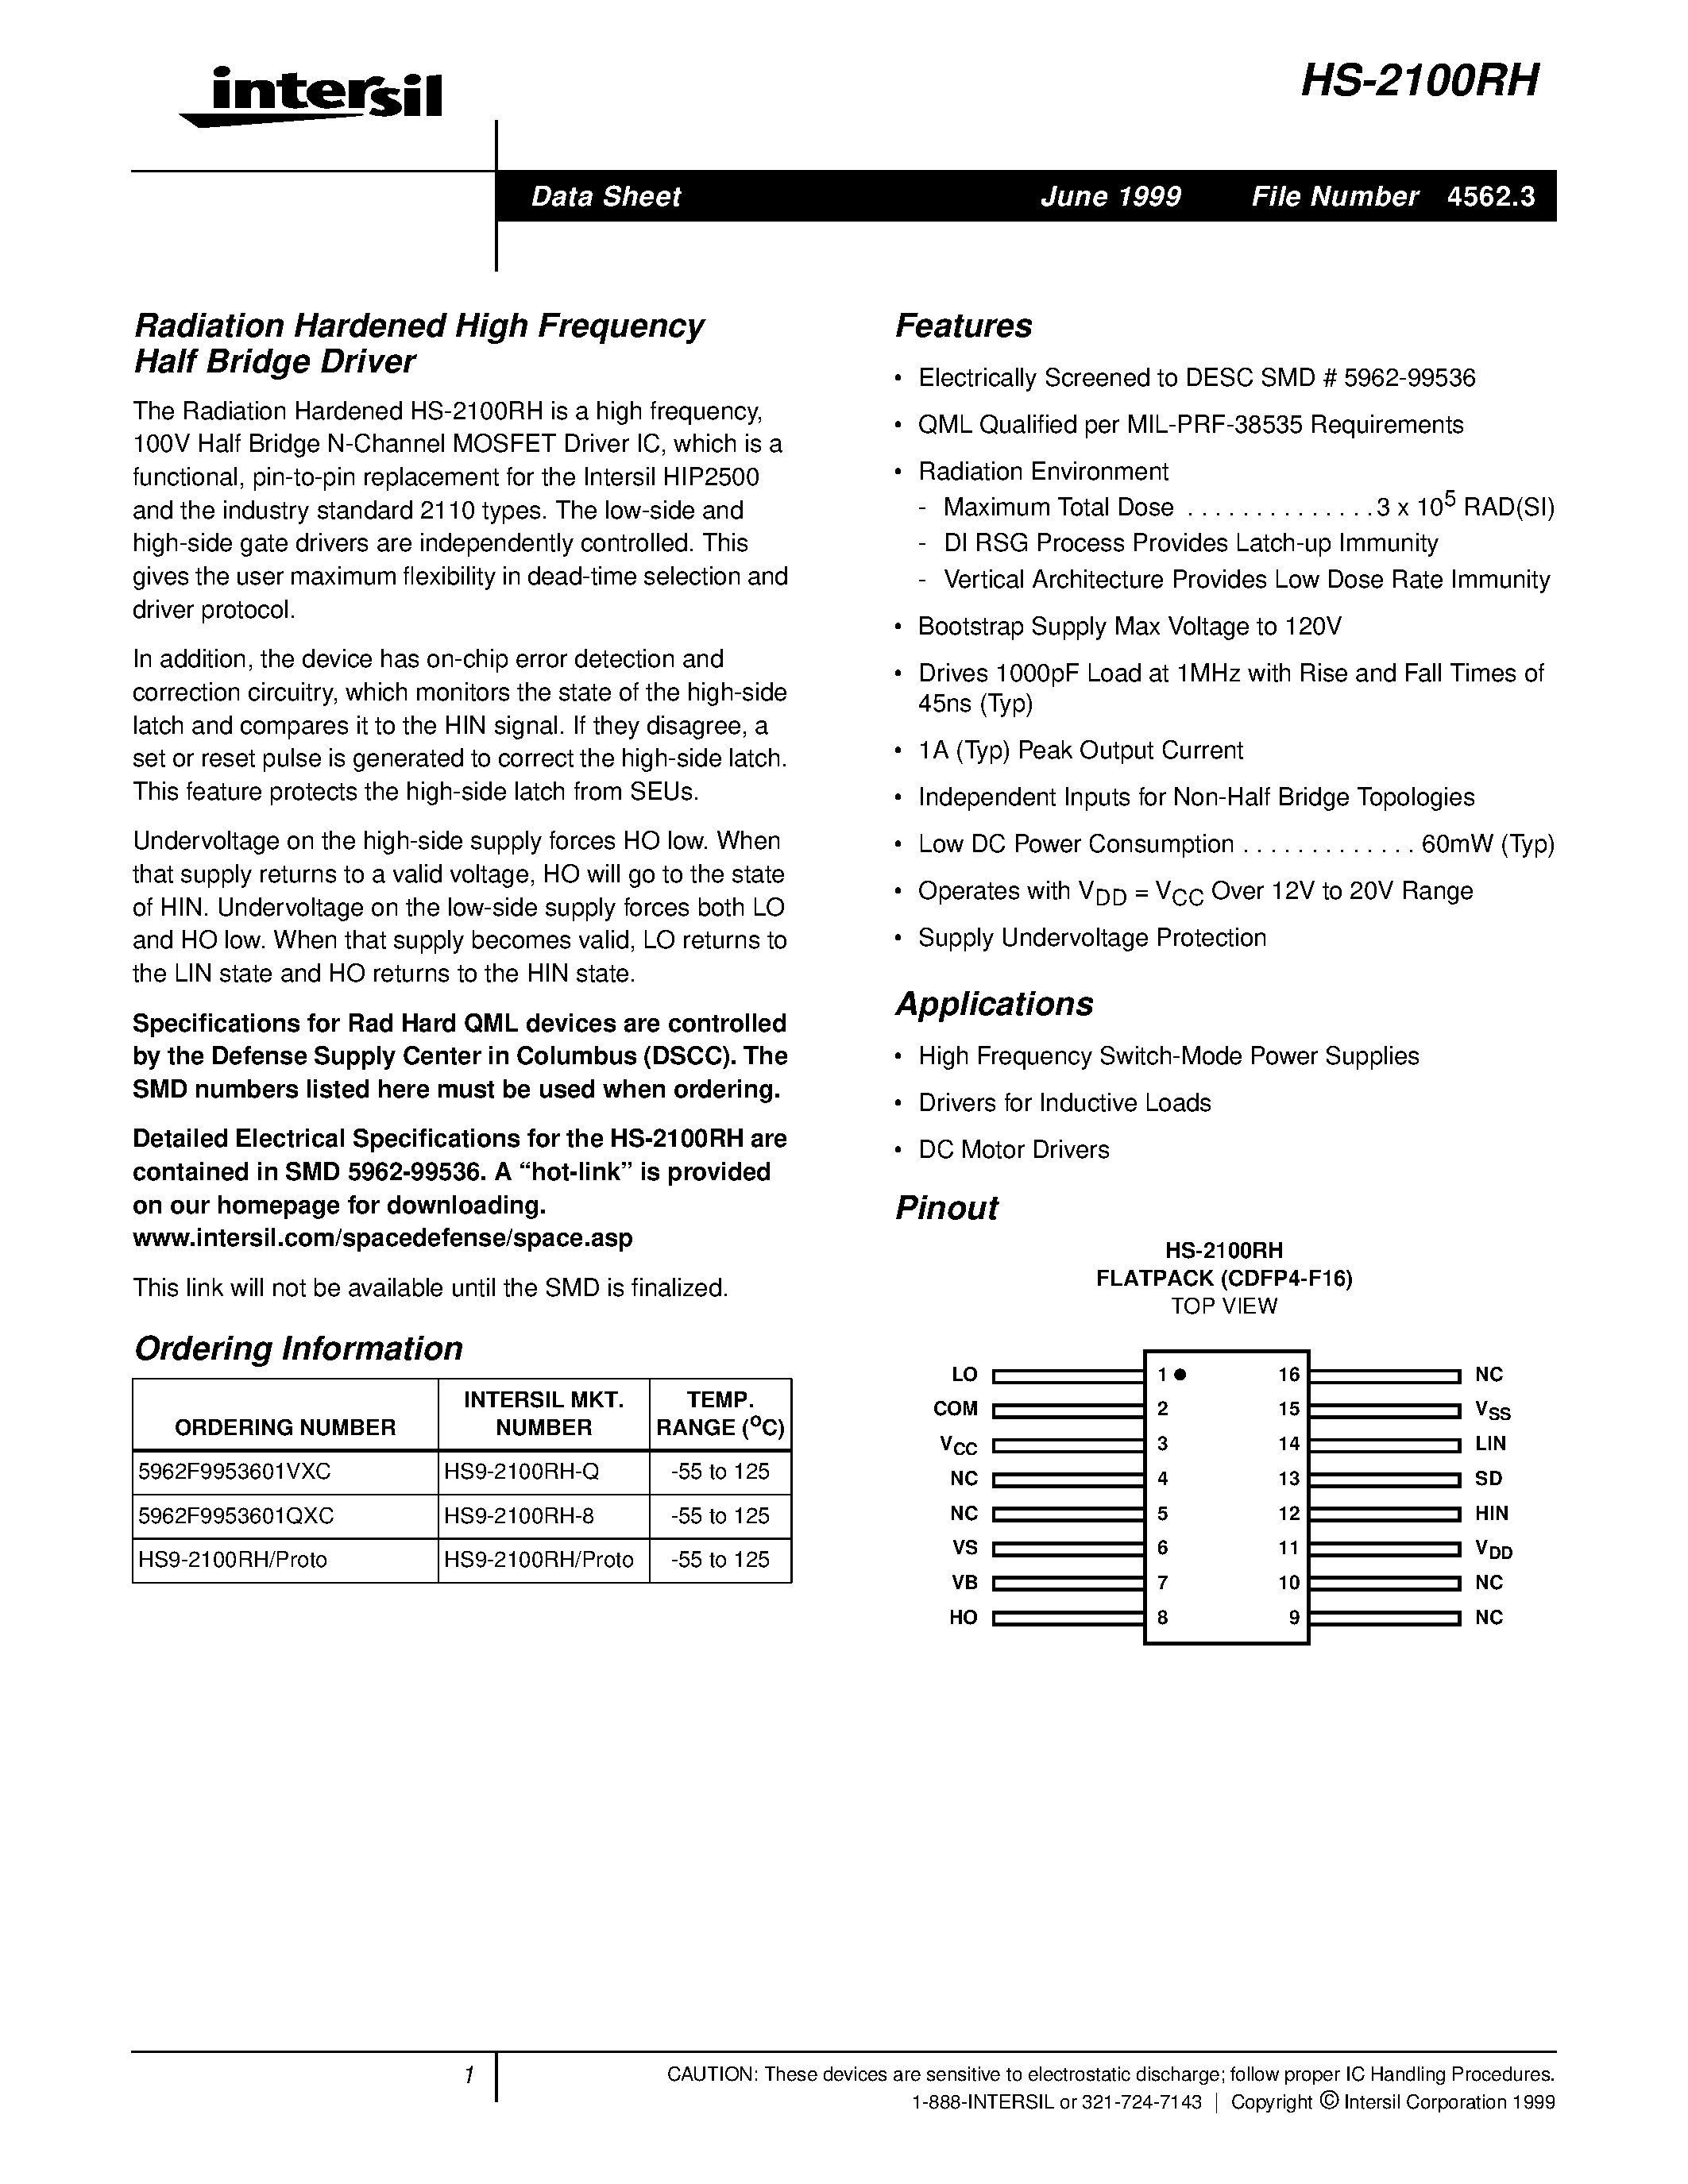 Даташит HS9-2100RH-Q - Radiation Hardened High Frequency Half Bridge Driver страница 1